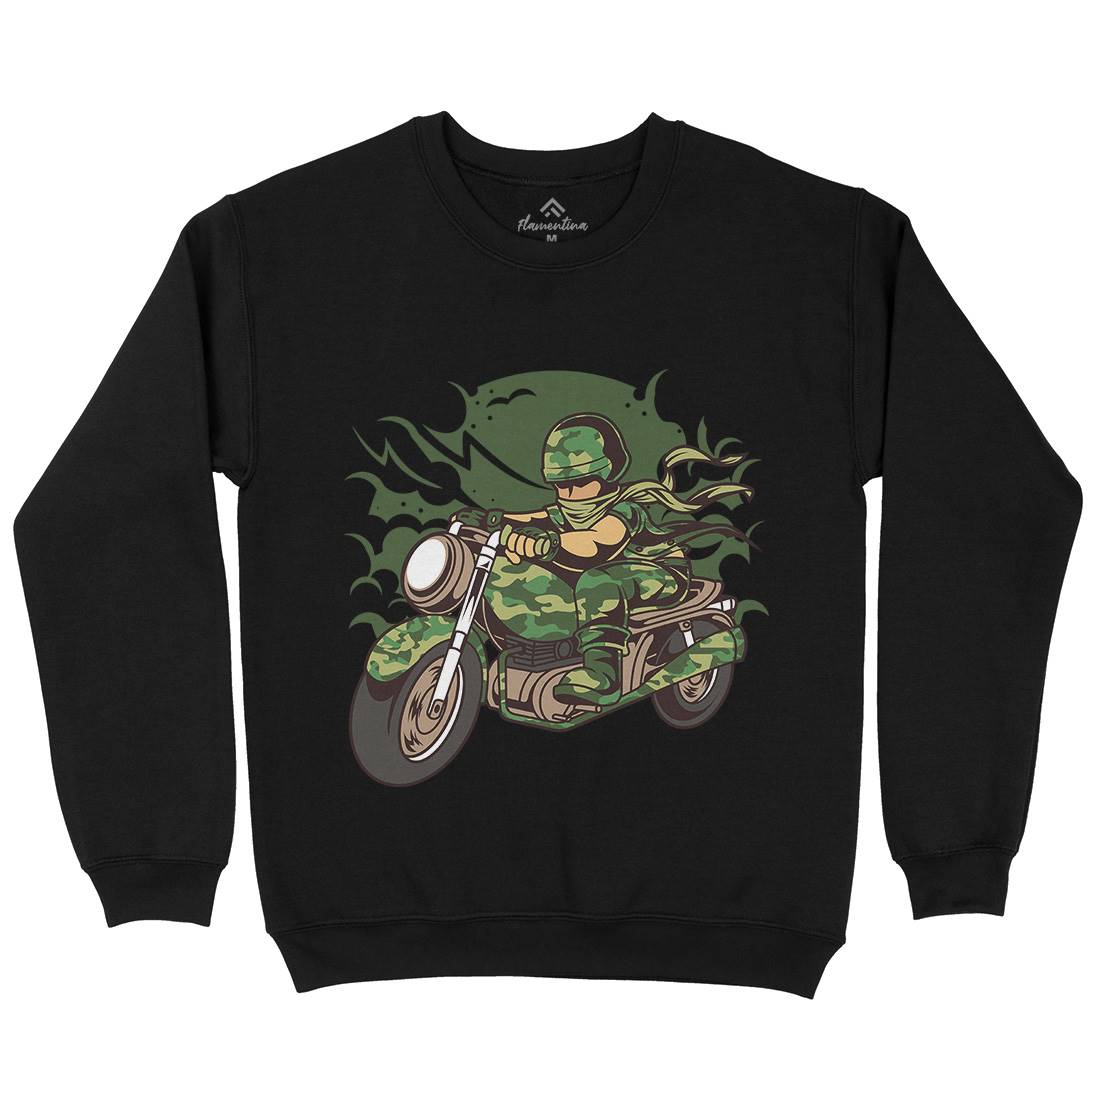 Motorcycle Ride Kids Crew Neck Sweatshirt Army C306